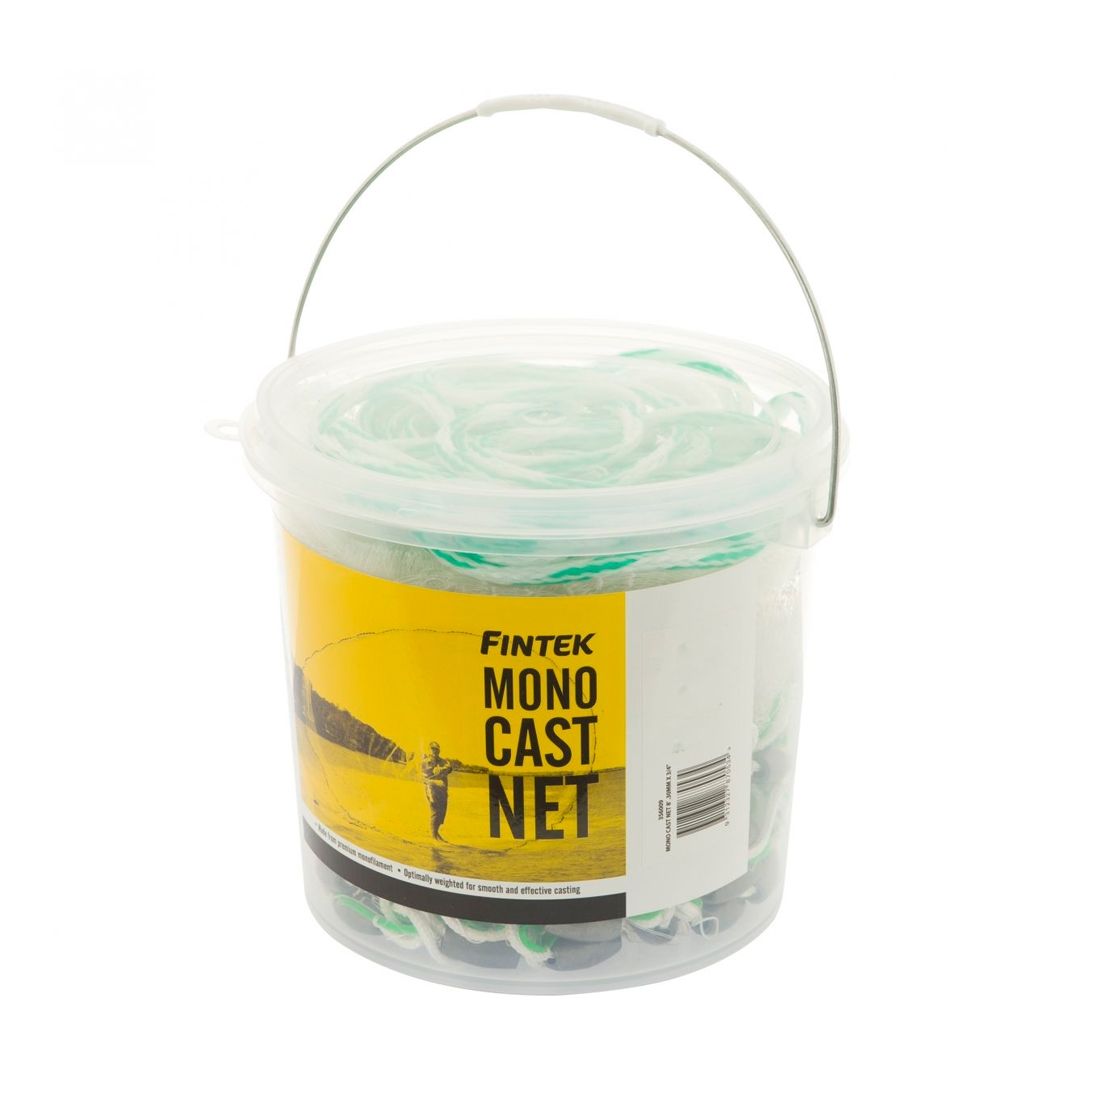 Fintek Mono Cast Net - Bottom Pocket - The Bait Shop Gold Coast